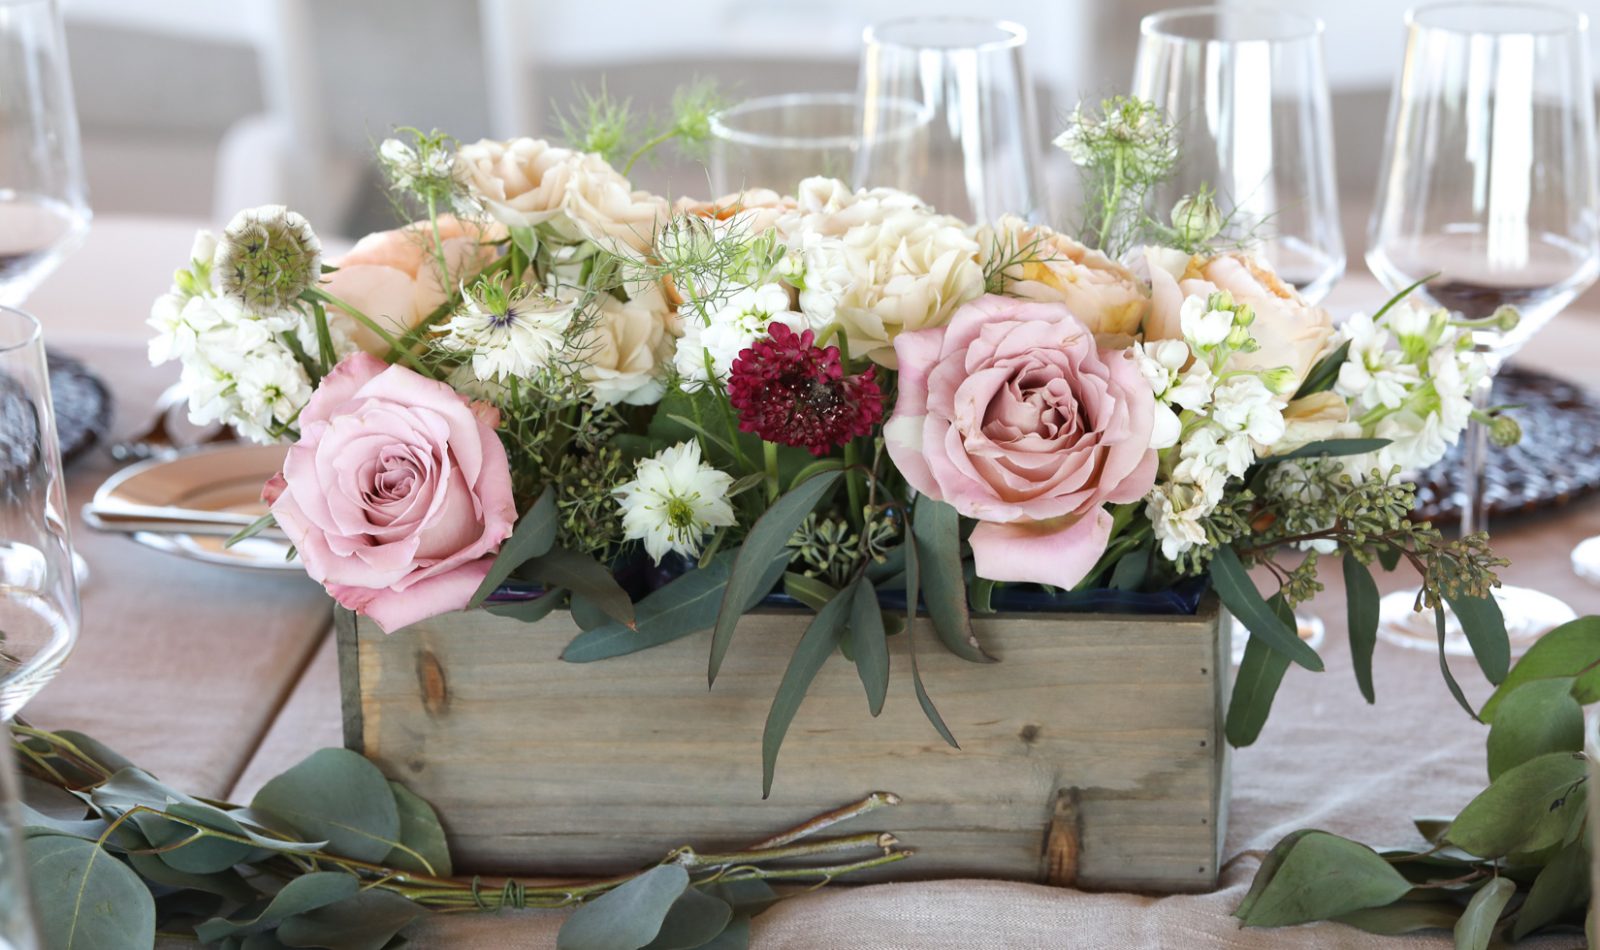 Floral arrangement idea, rustic summer centerpiece with roses, scabiosa, white stock